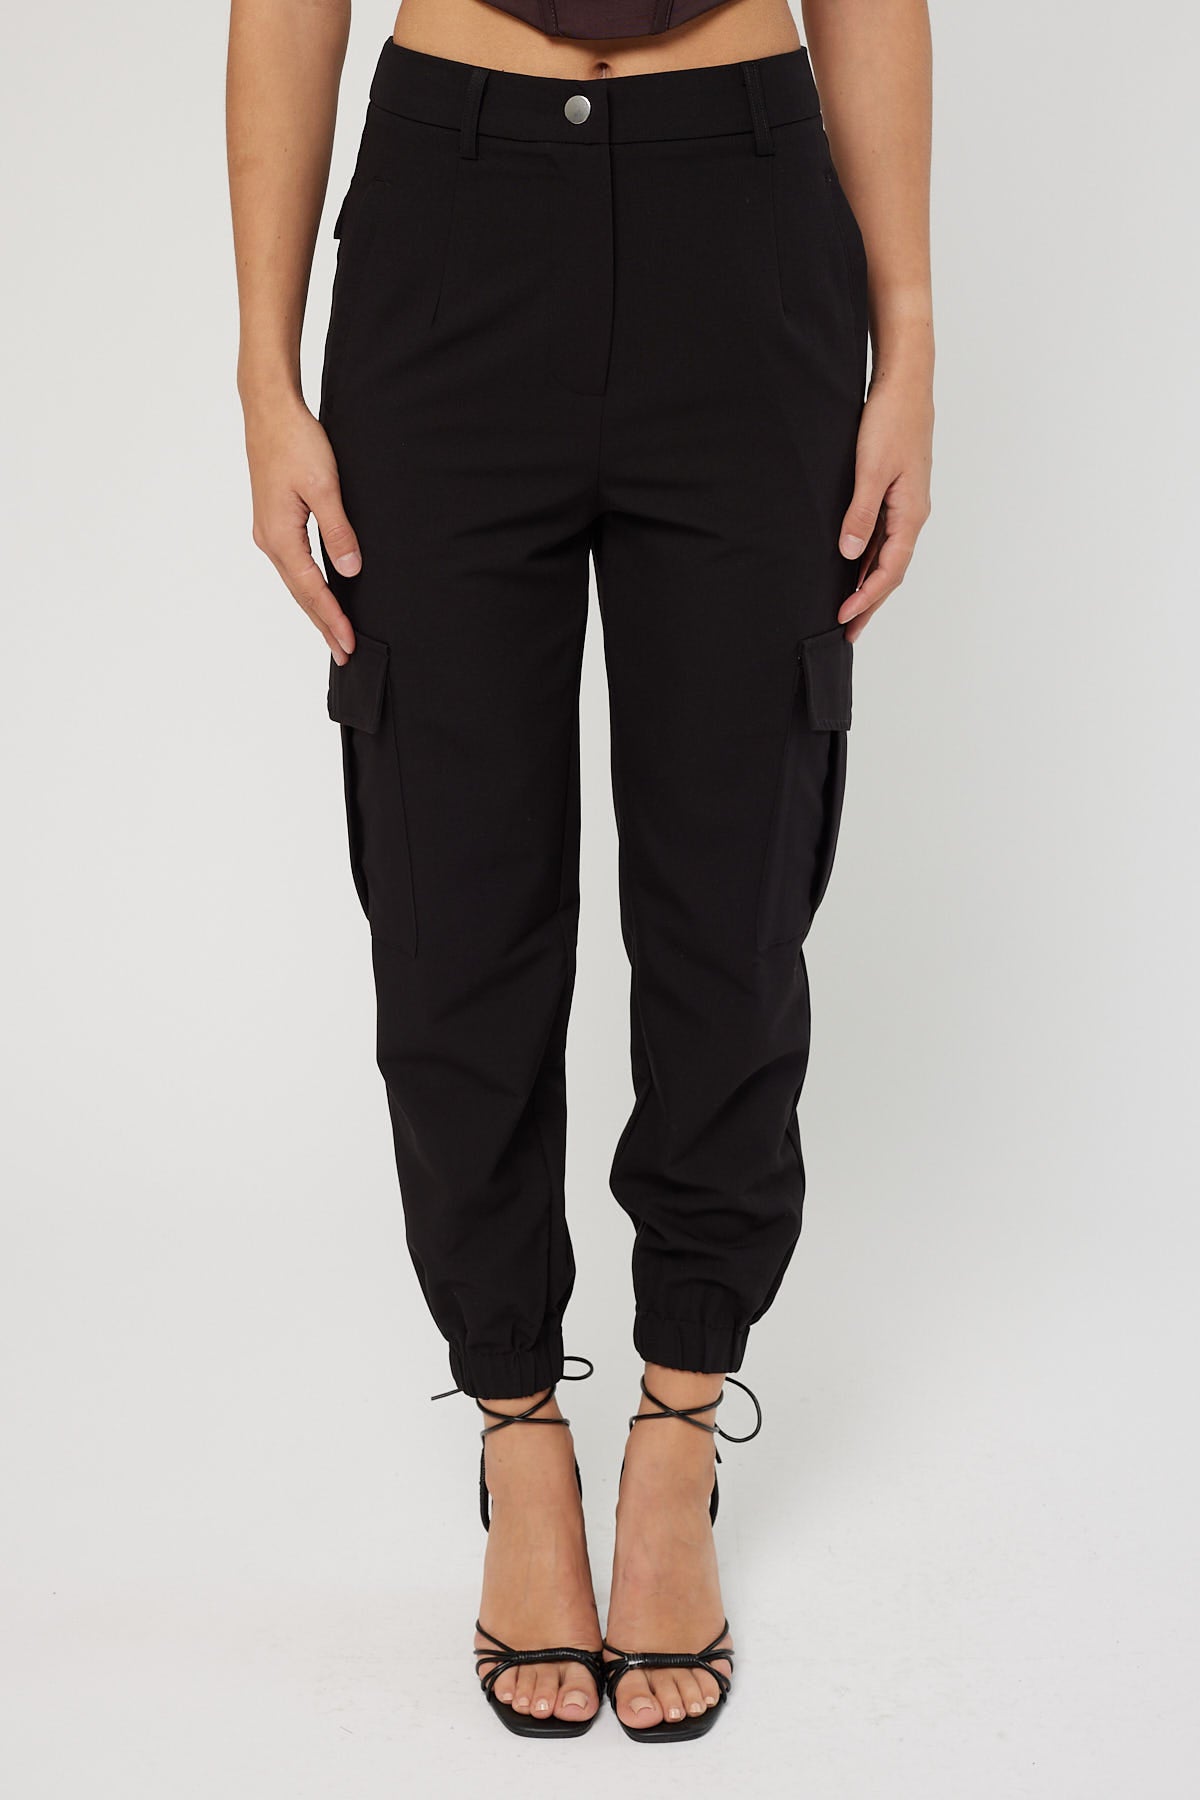 Luvalot Clothing Cuffed Cargo Pant Black – Universal Store